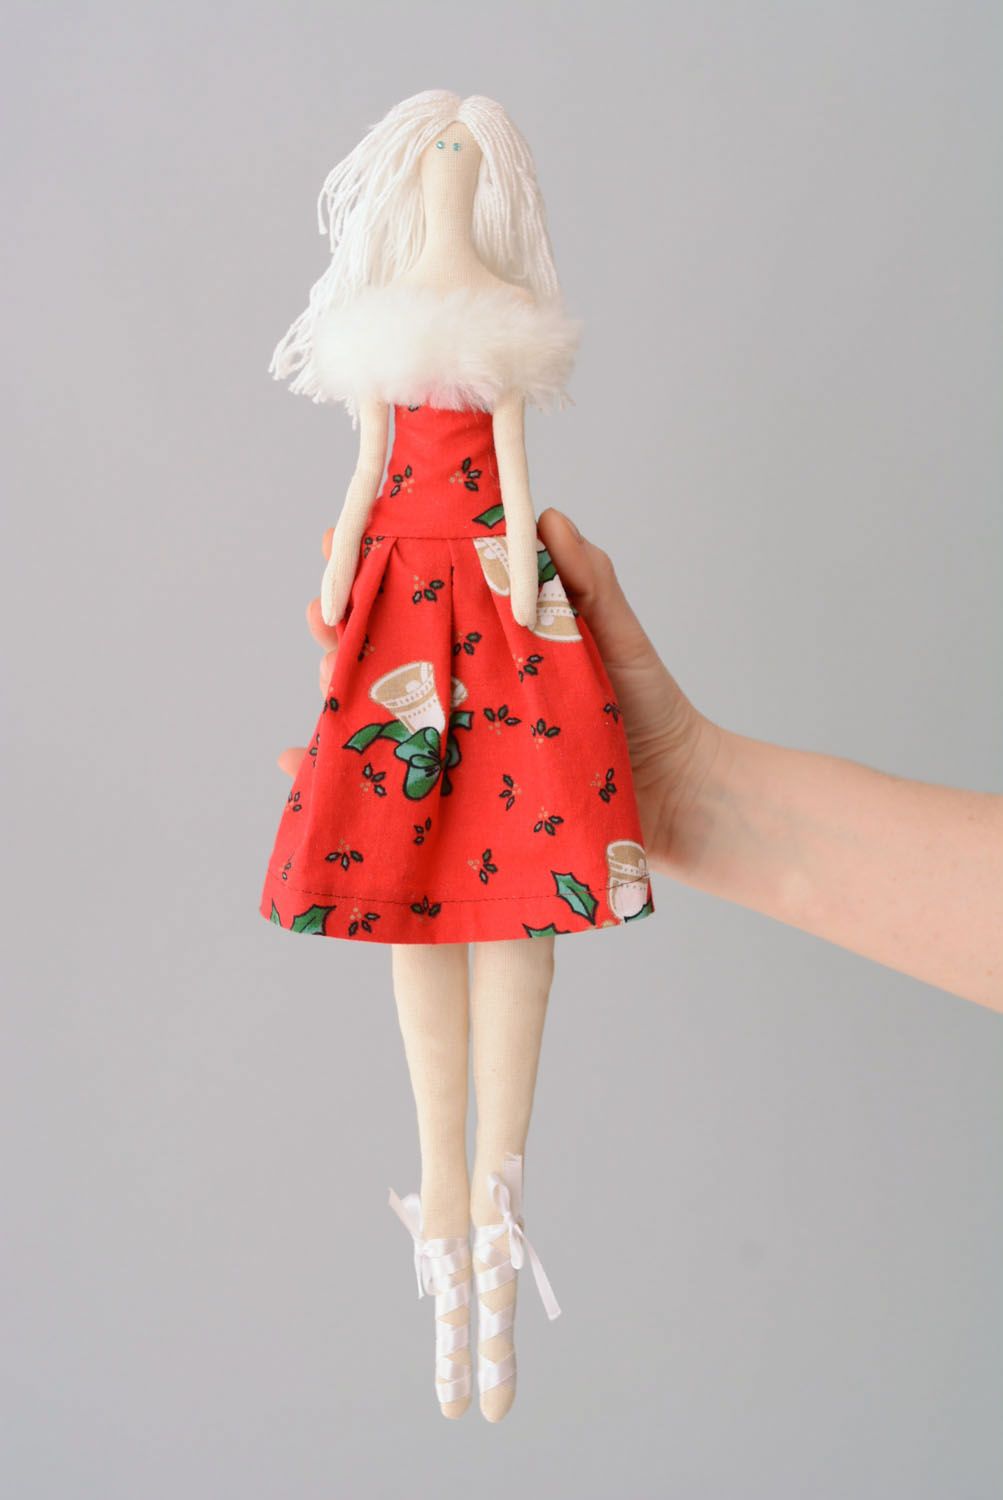 Designer doll in red dress photo 2